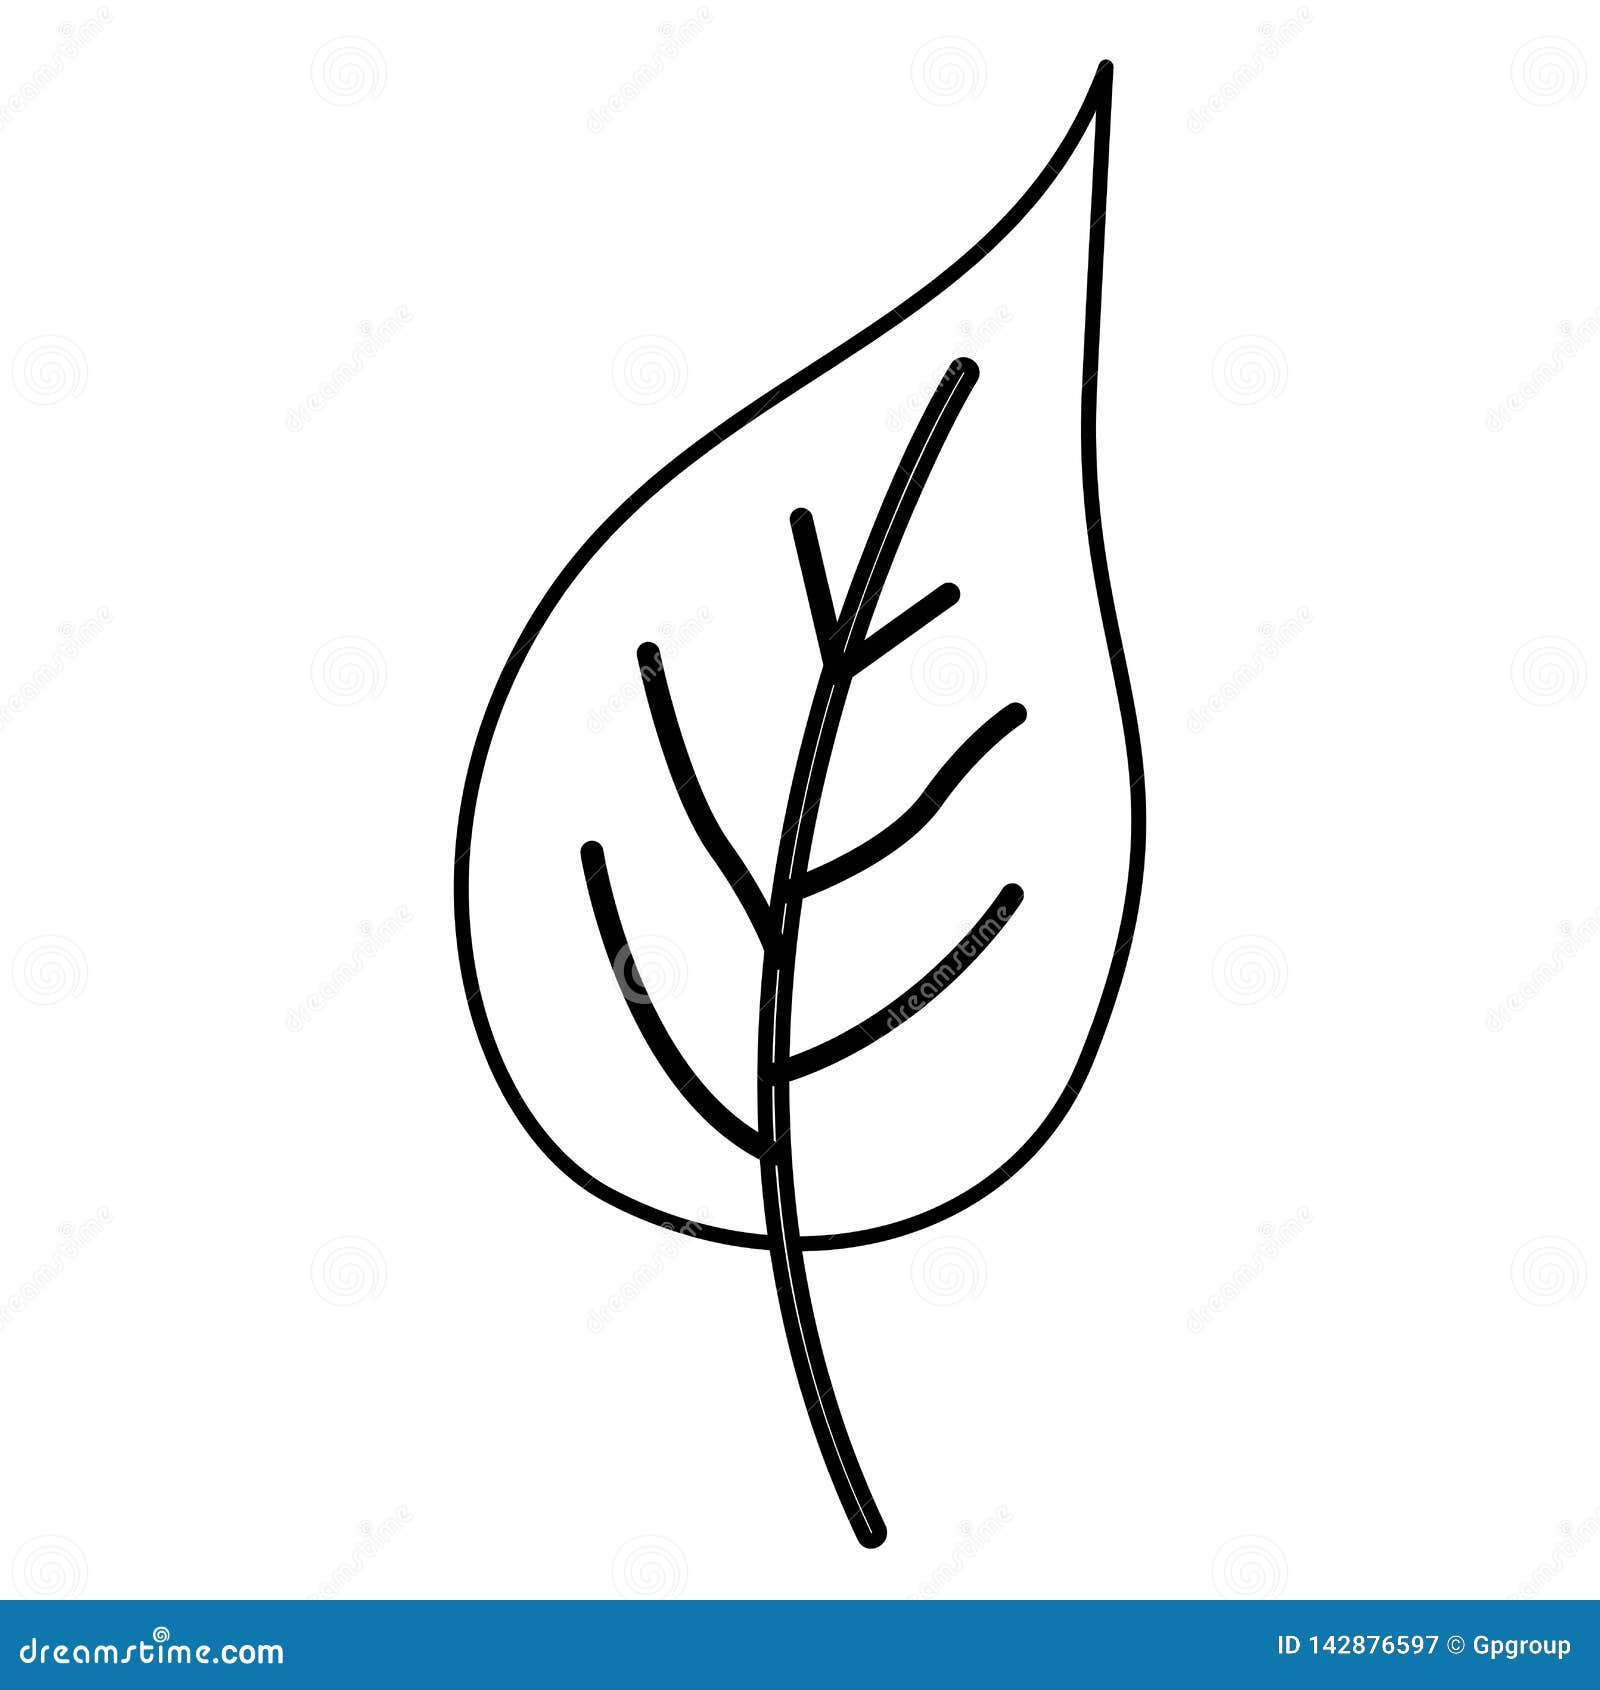 Pencil sketch a plant leaf flat doodle style Vector Image